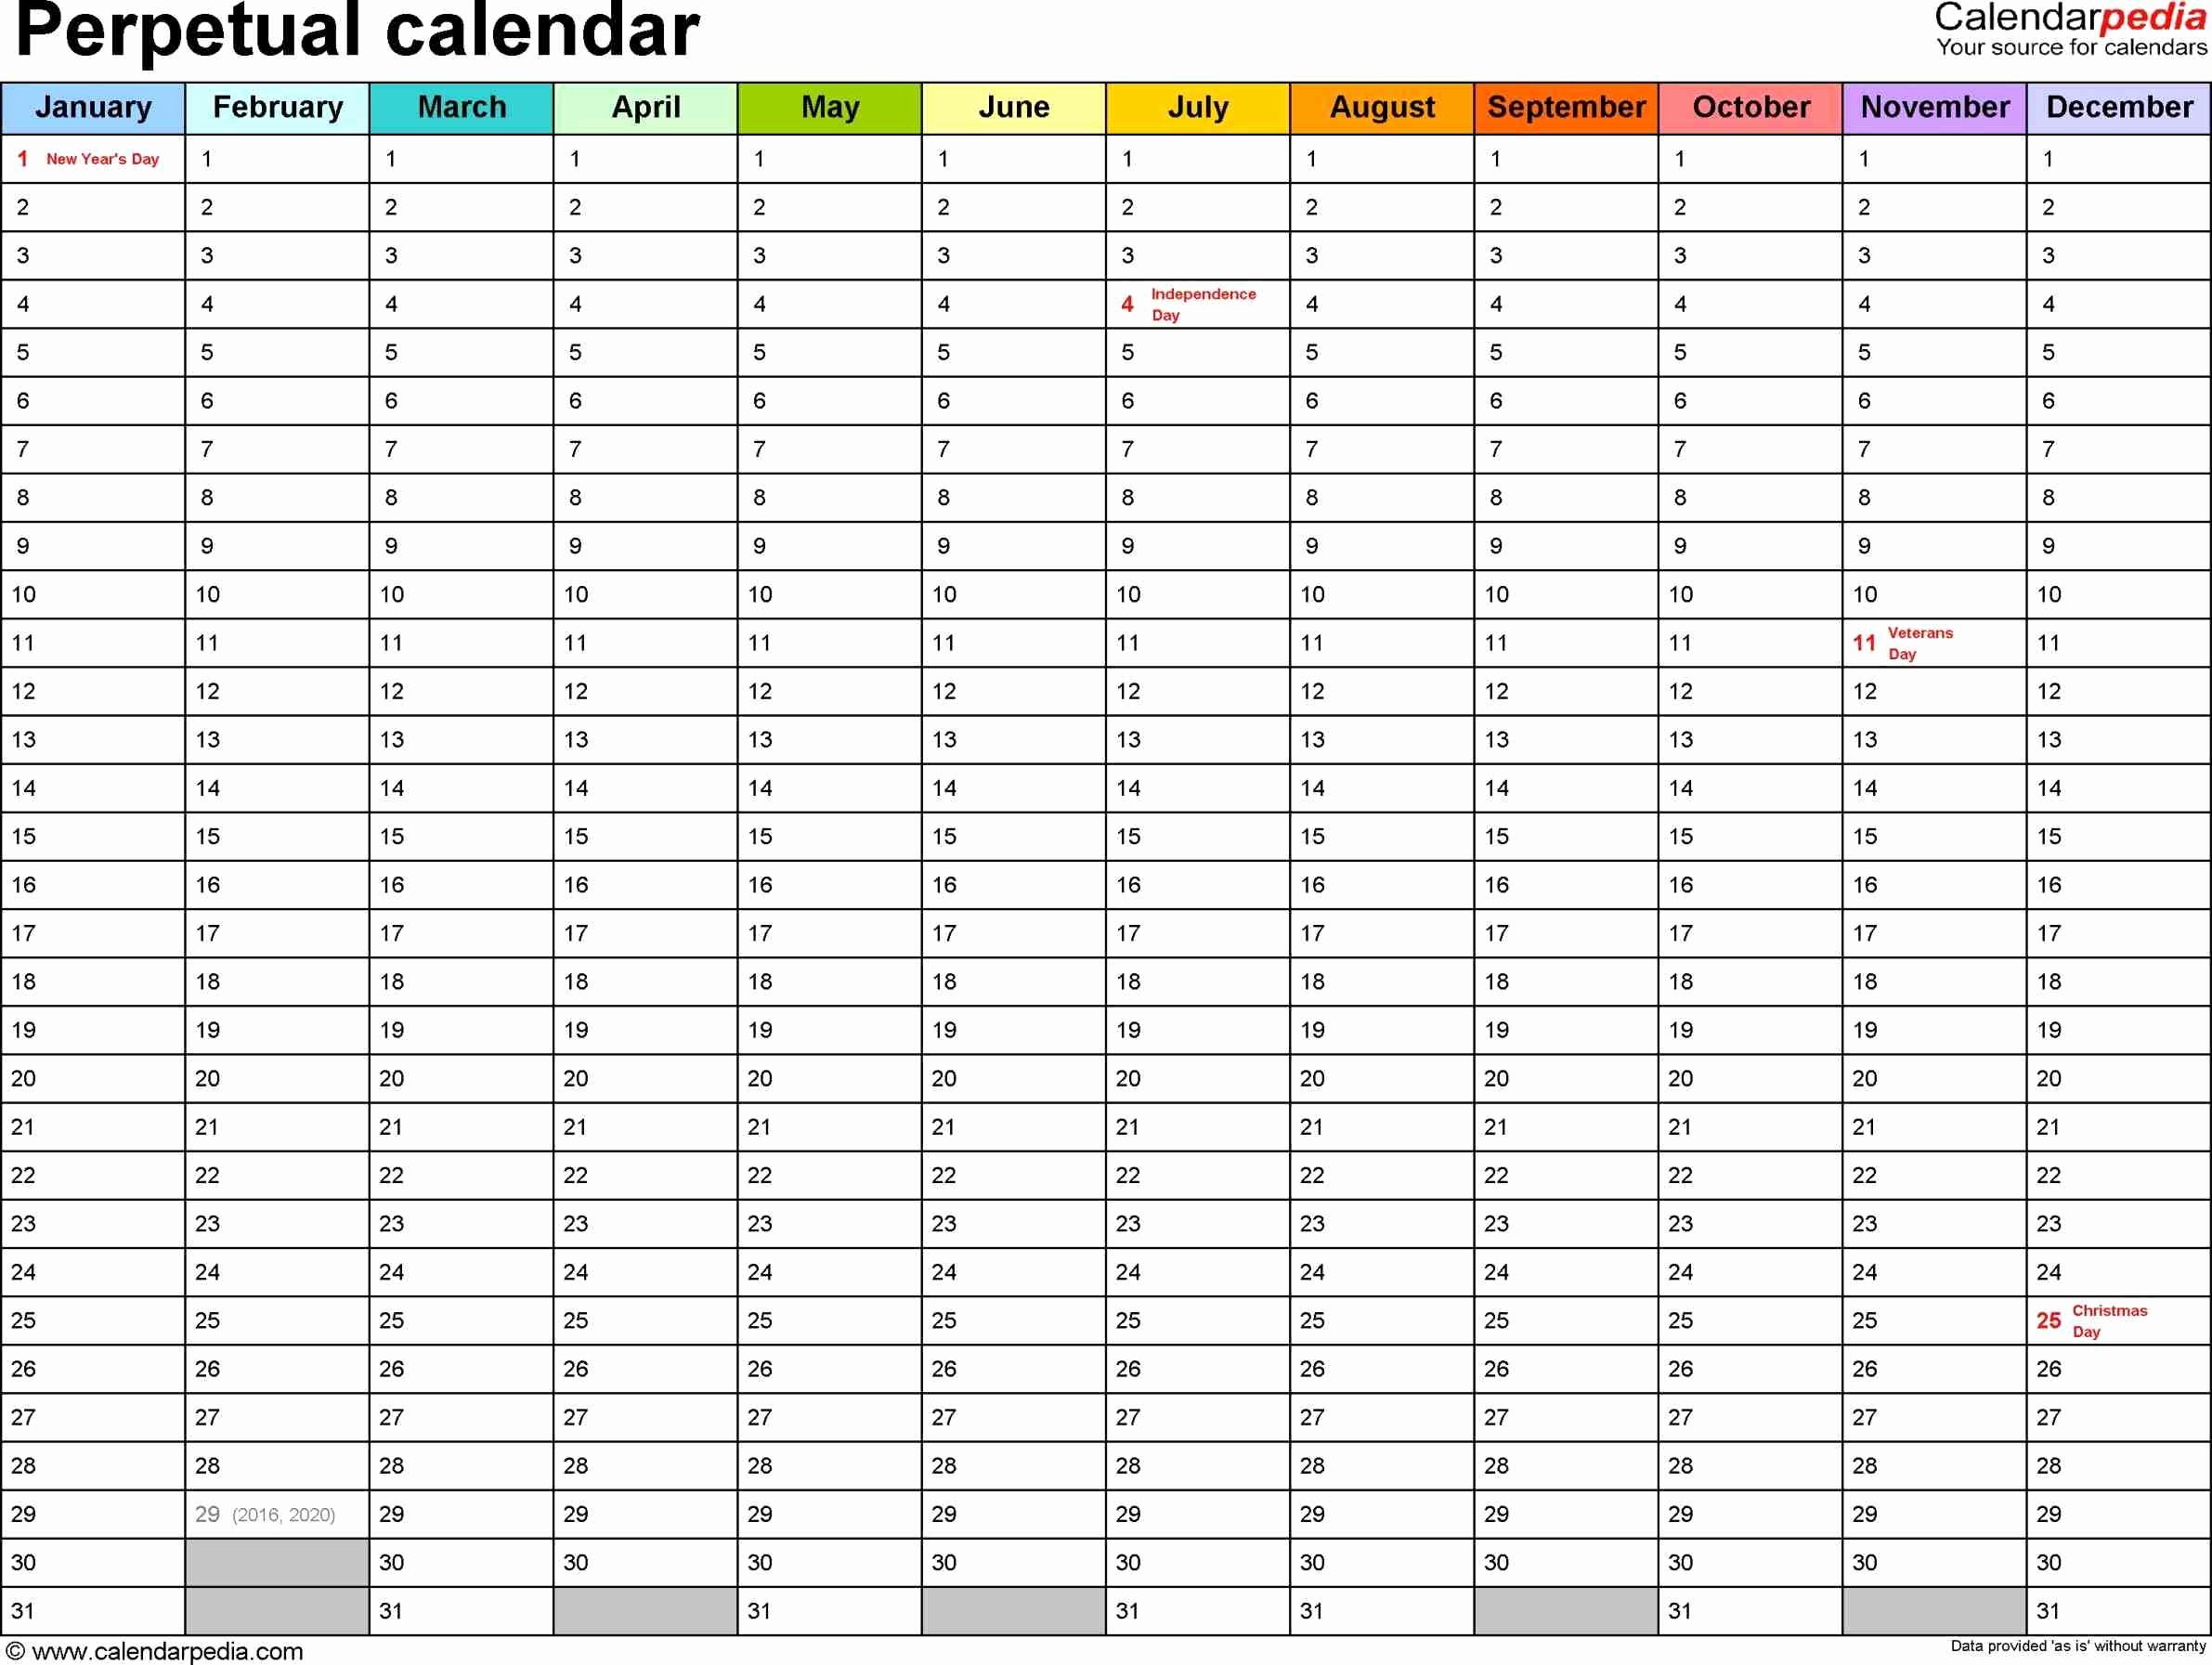 Hourly Schedule Template Excel